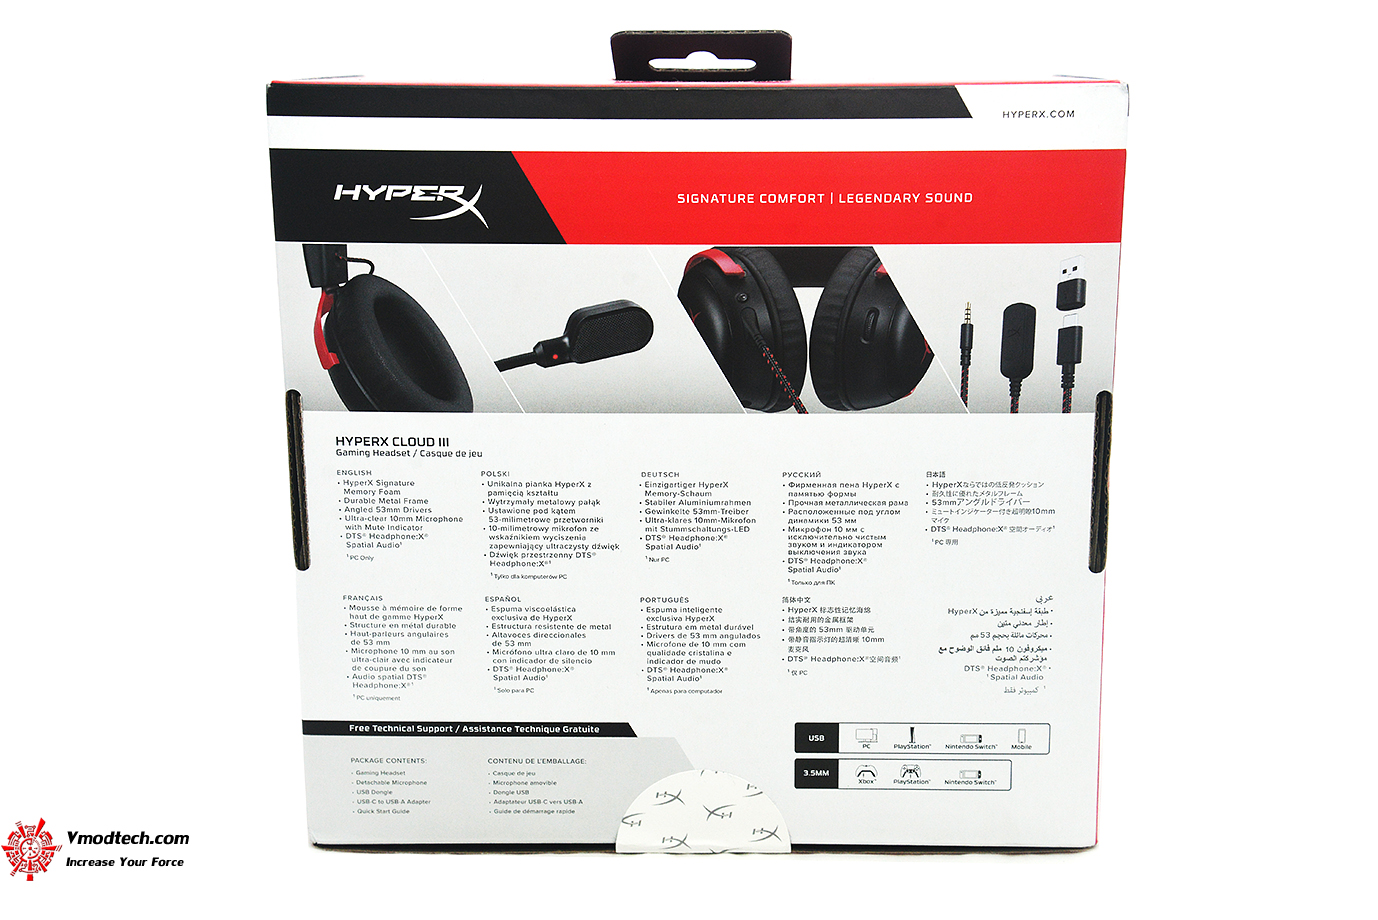 dsc 0671 HyperX Cloud III Gaming Headset Review